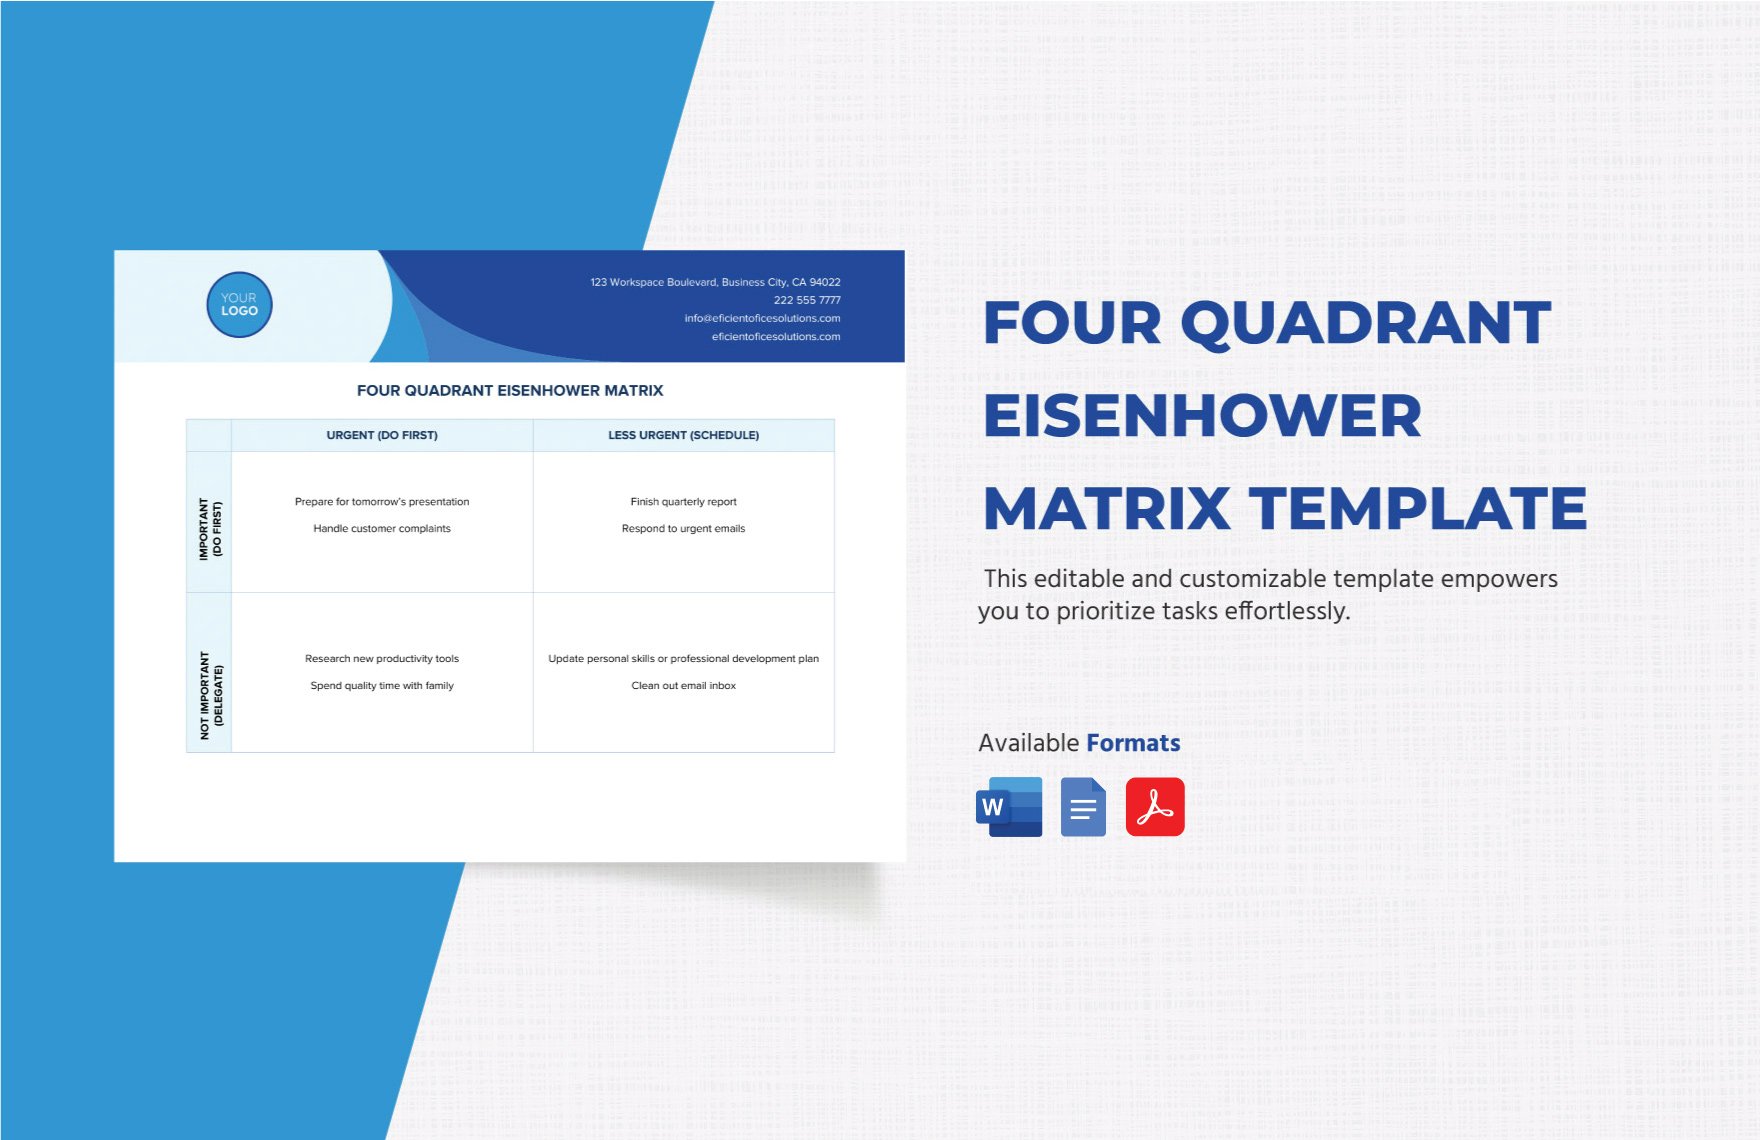 Four Quadrant Eisenhower Matrix Template